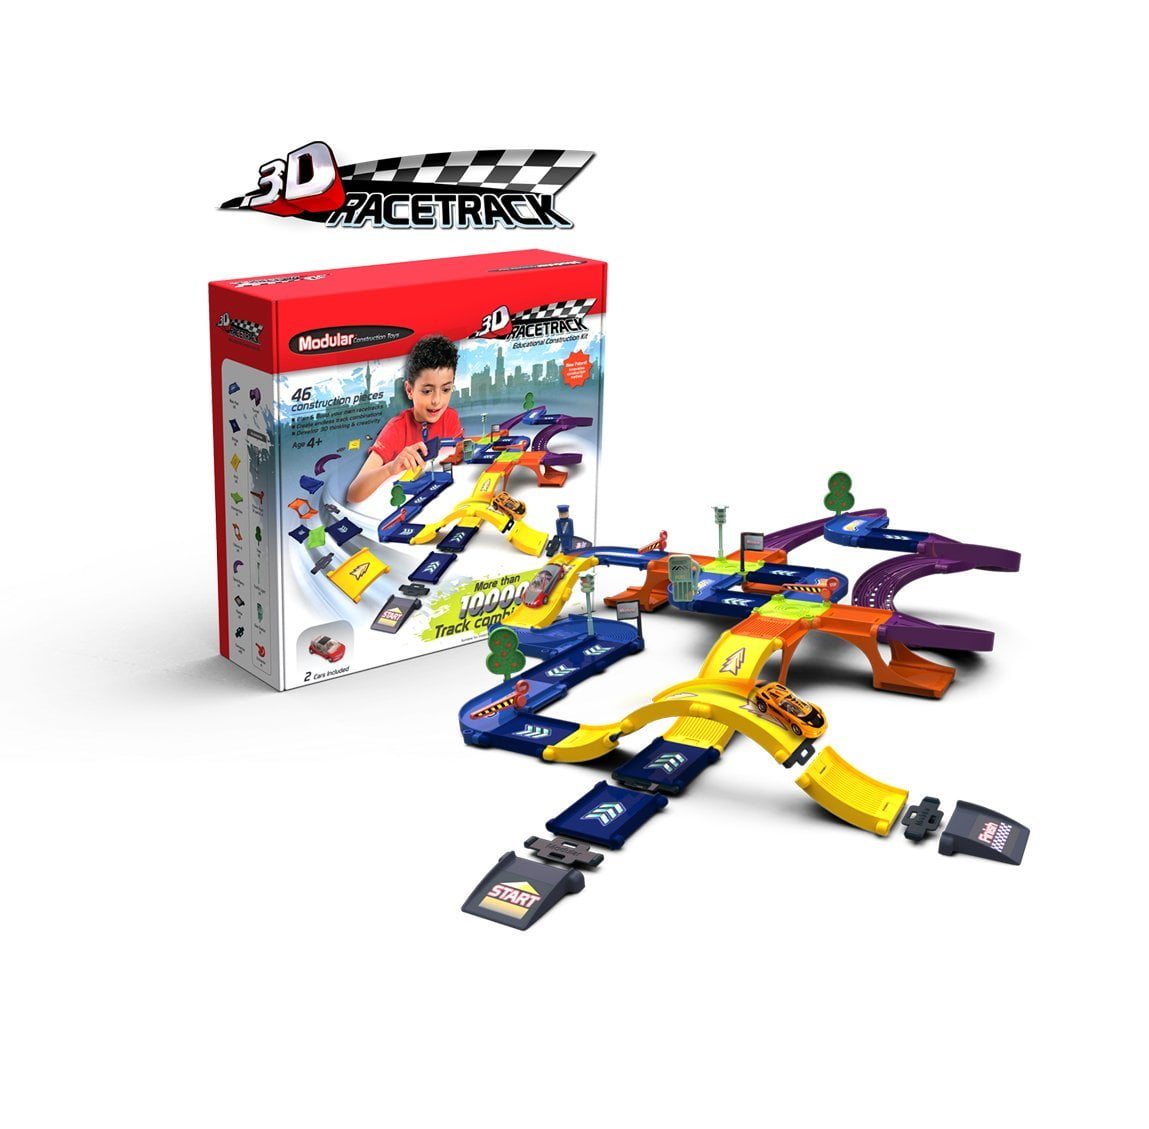 New Building Toy Boys Girls Modular 3D Construction Car Race Track Build Ages 4 